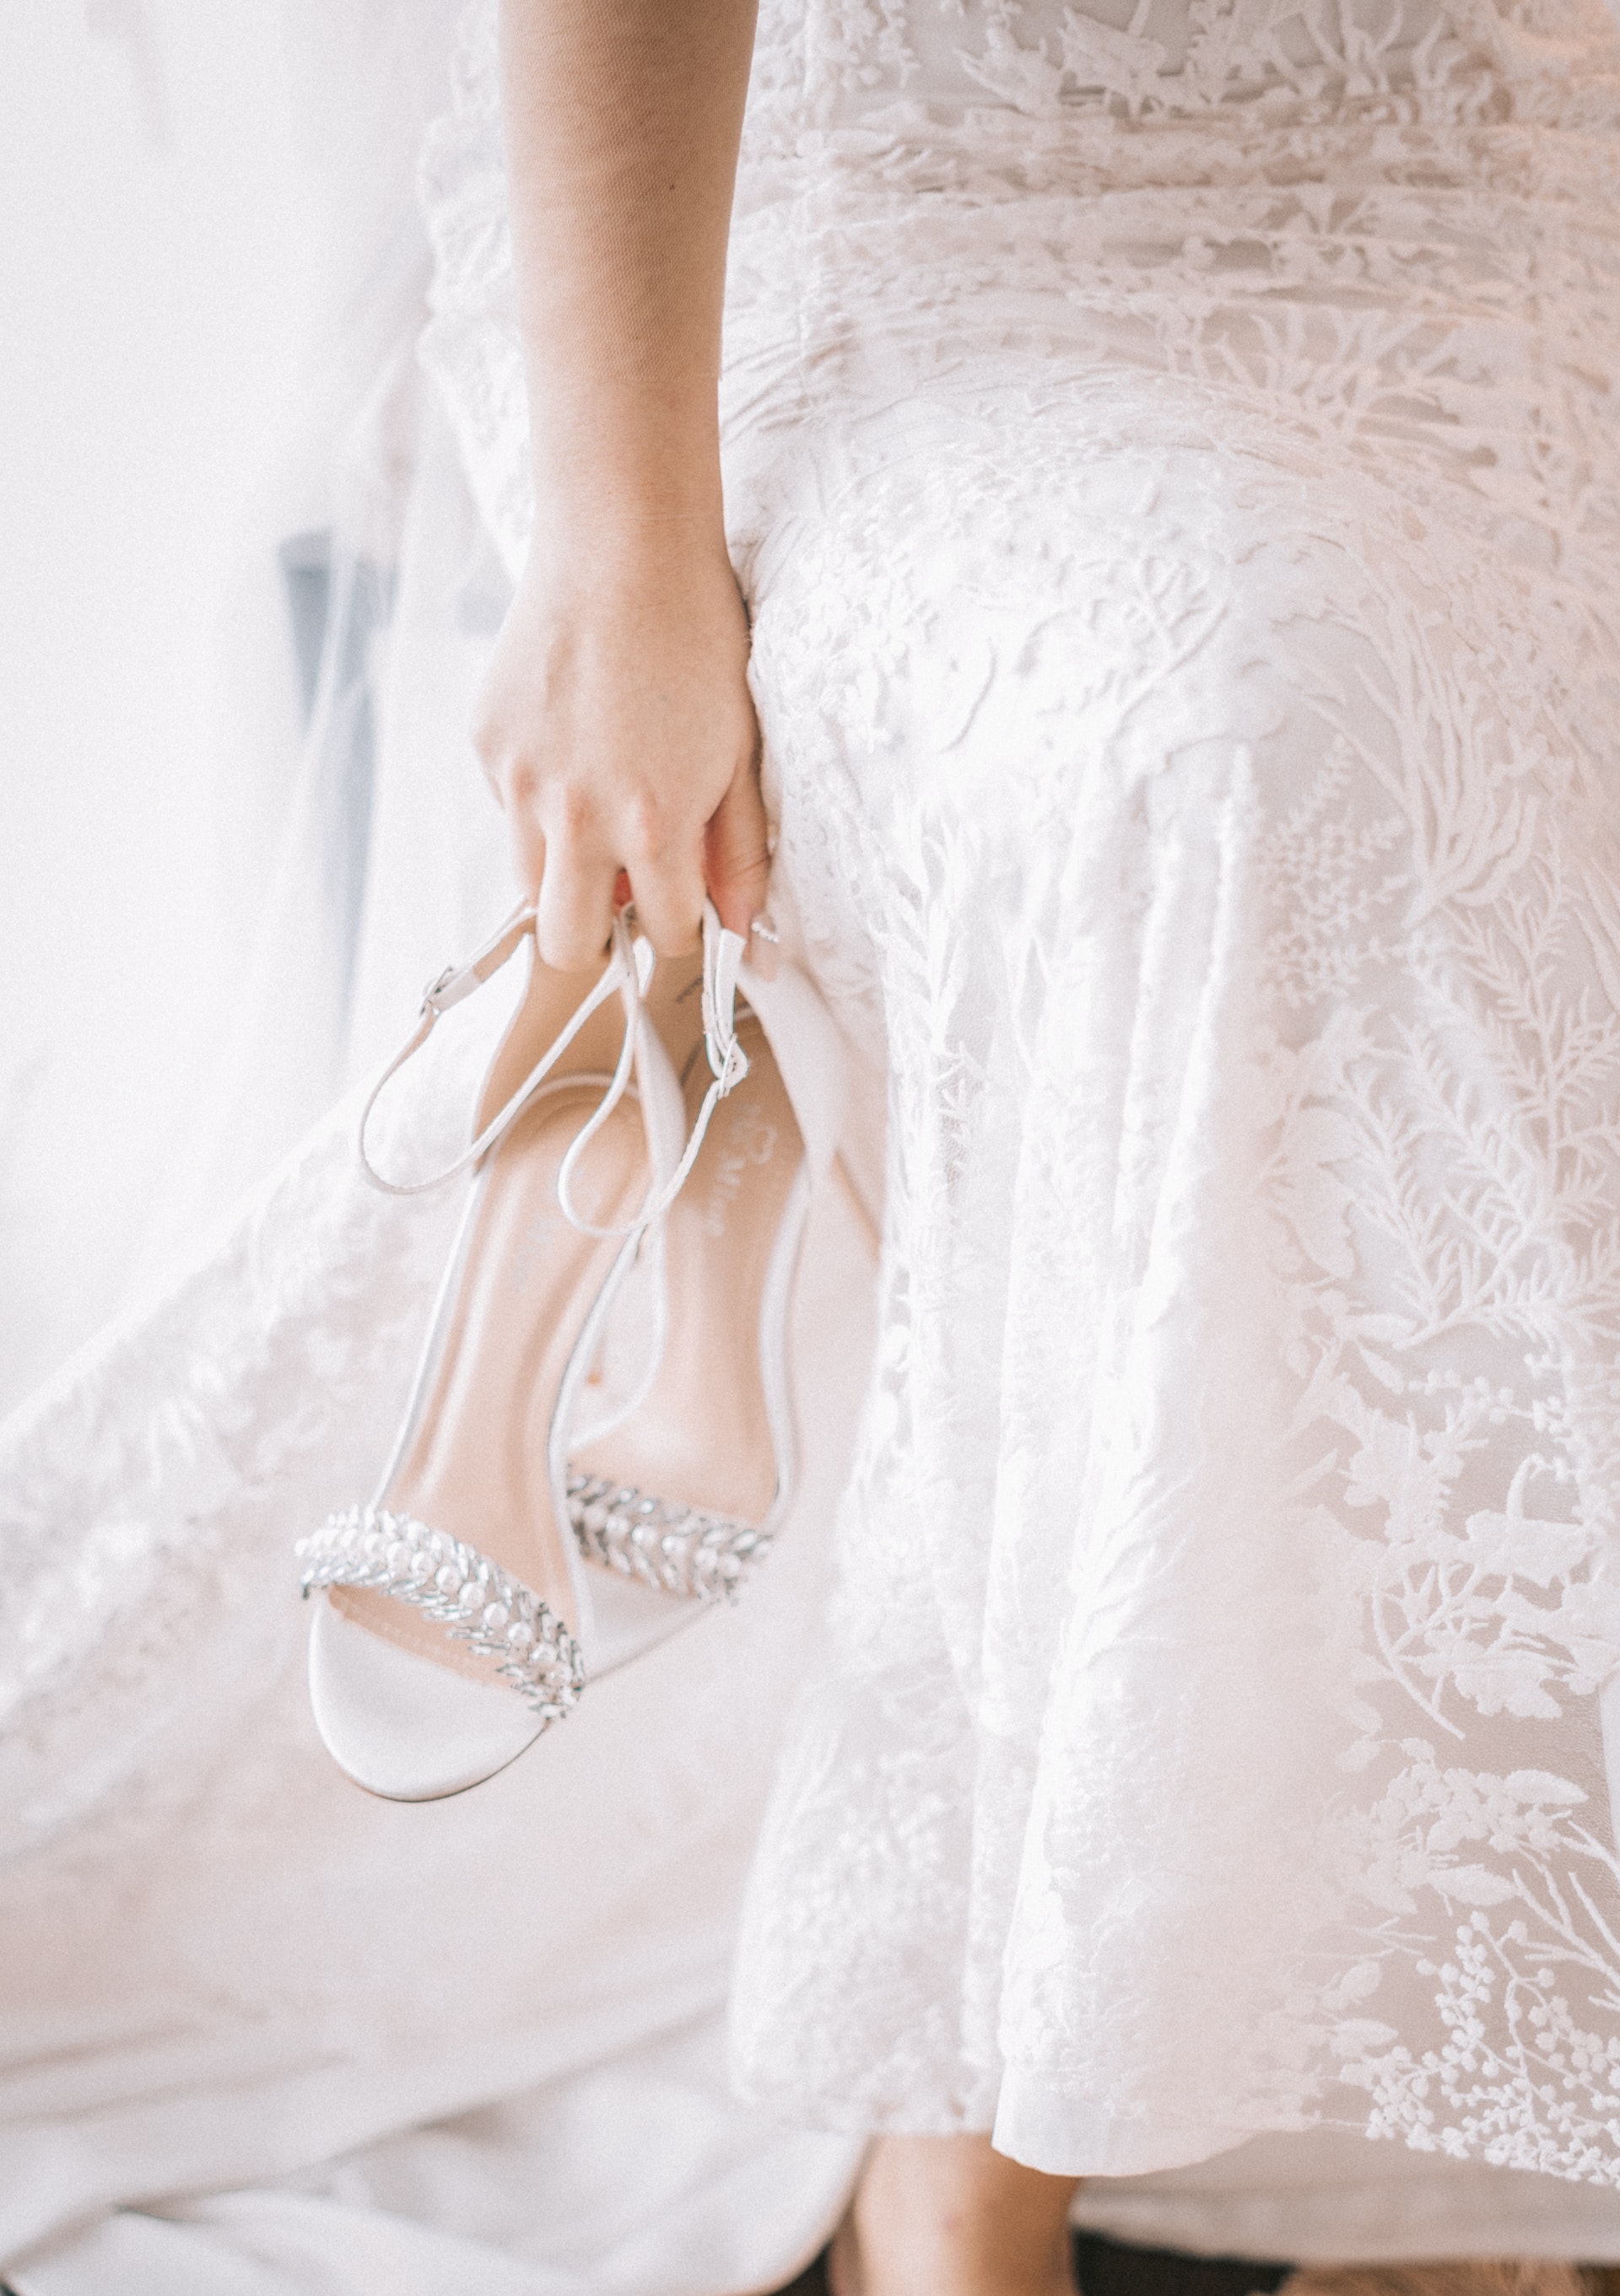 A bride holding her heels | Source: Pexels